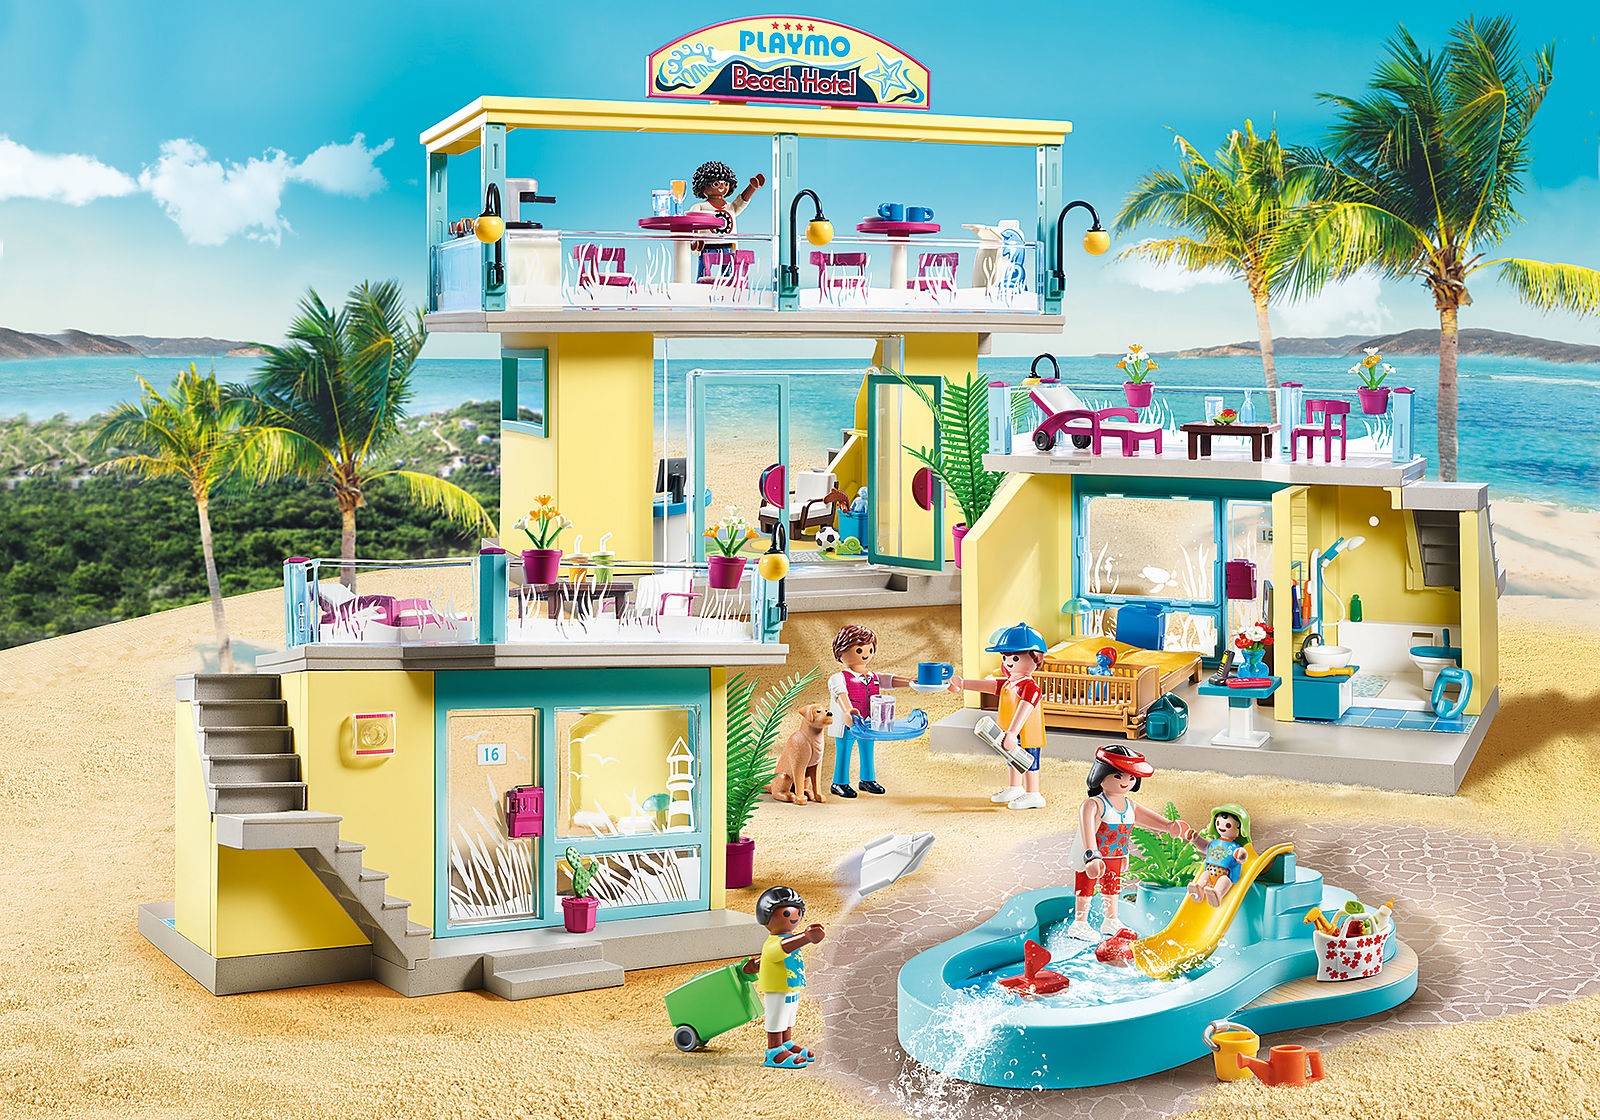 Playmobil Family Fun 70434 Playmo Hotel na plaży